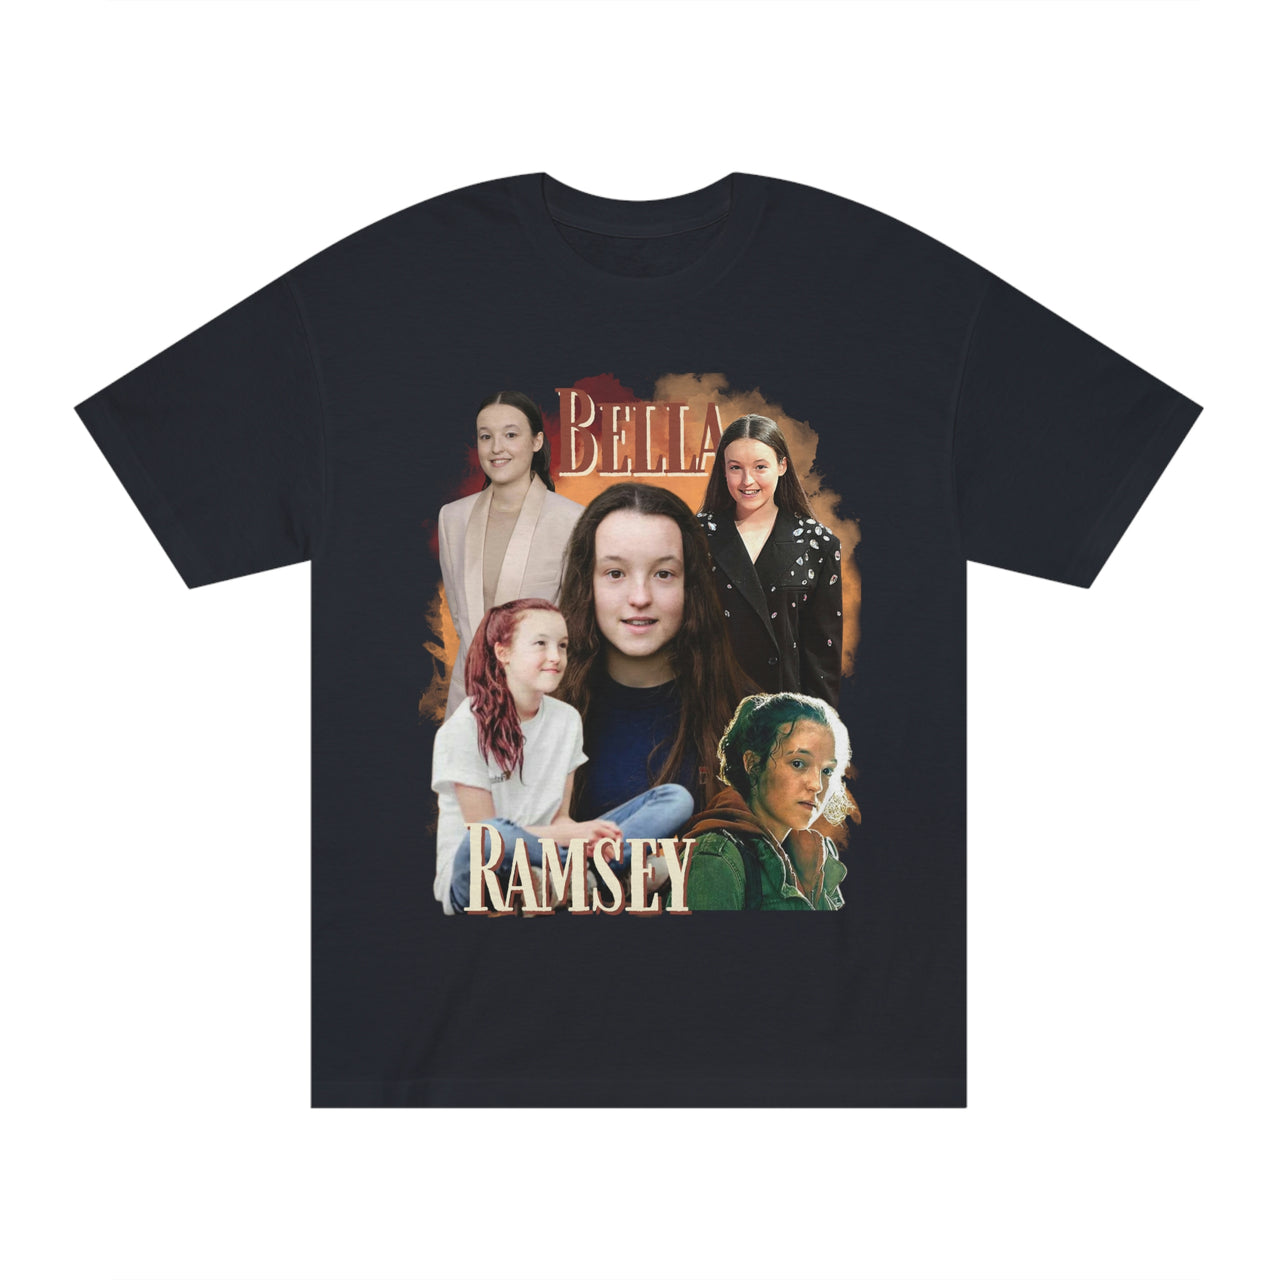 Bella Ramsey Shirt, Bootleg Shirt Vintage Style The Last of Us Fan Gift TShirt, Y2K English Actress Fan Tee